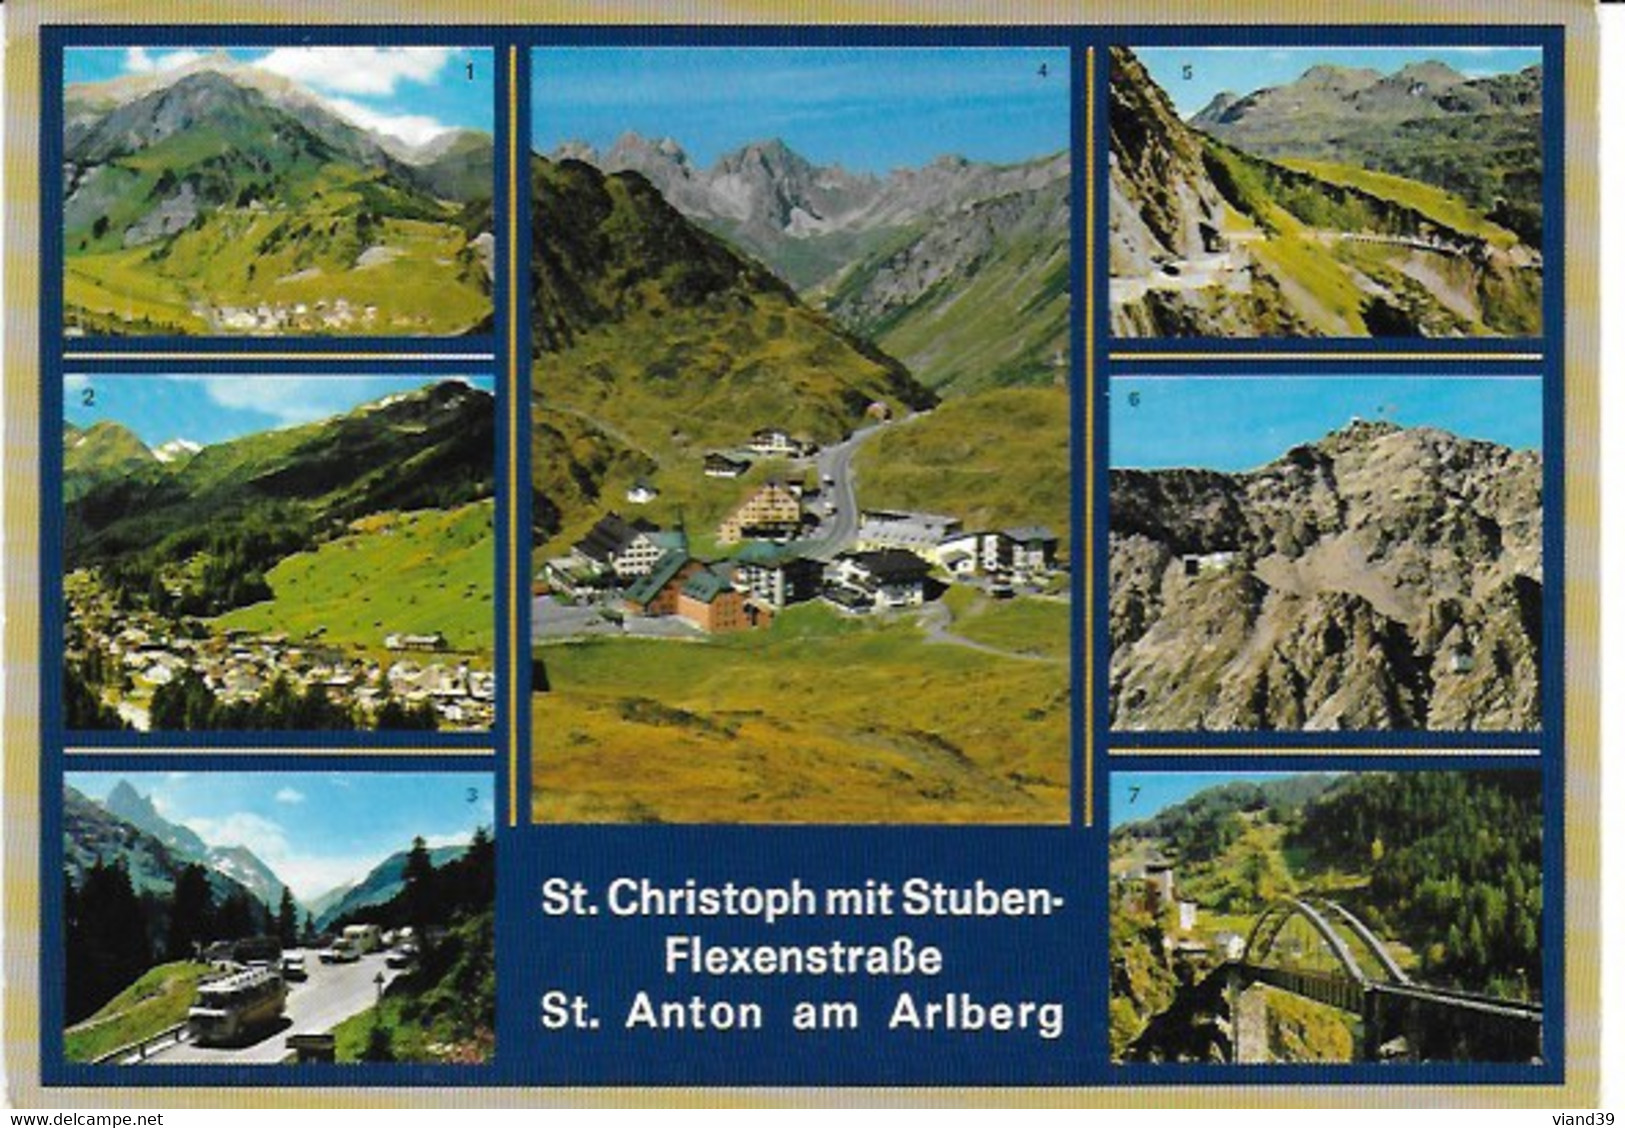 St Christoph Mit Stuben-Flexenstrasse - St. Anton Am Arlberg